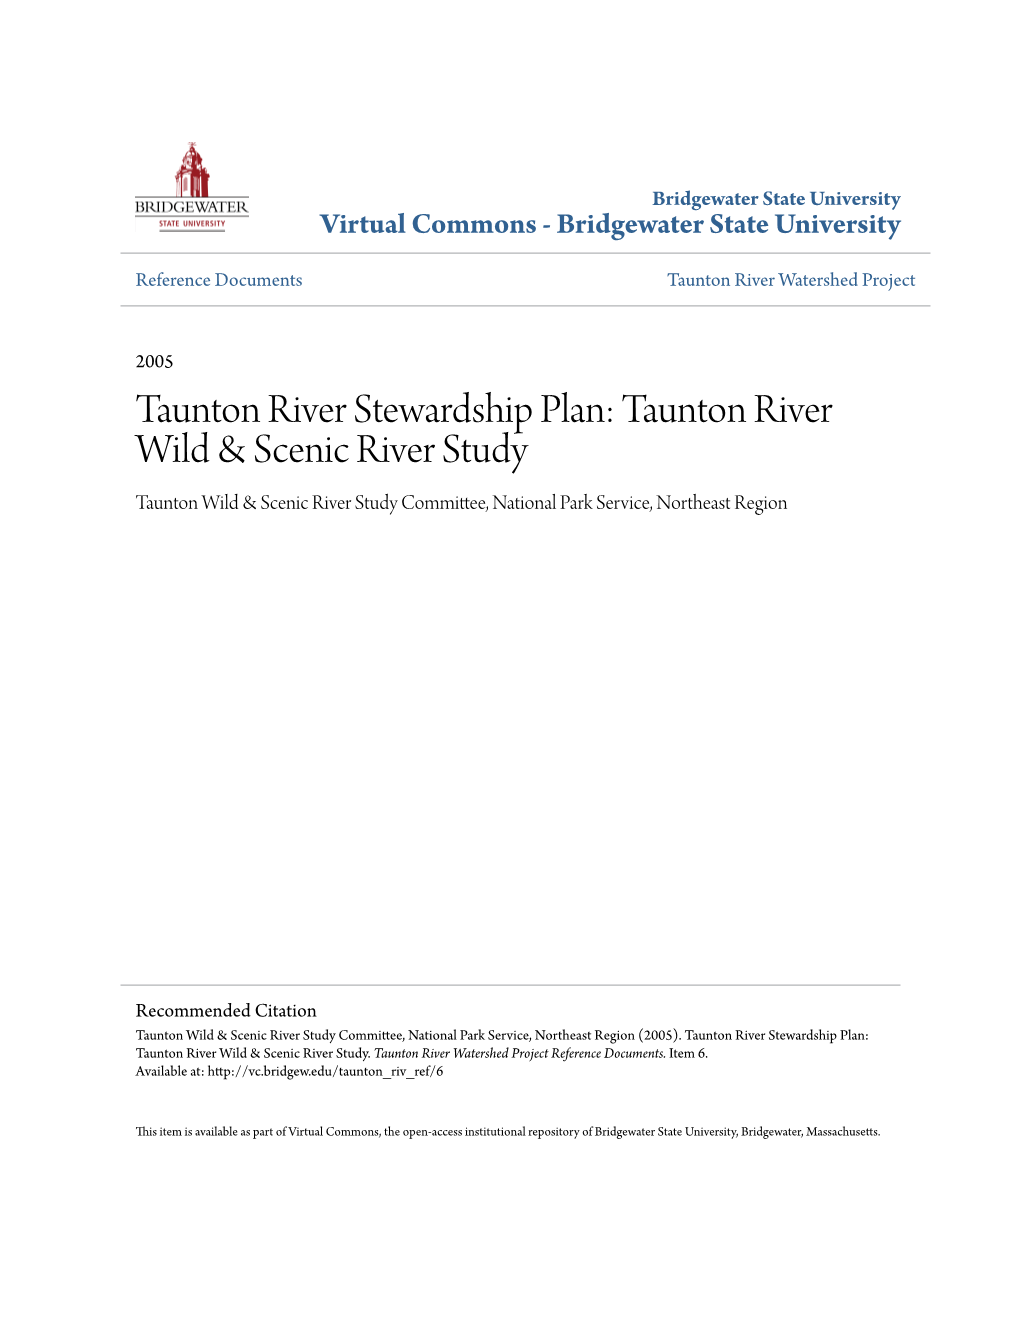 Taunton River Stewardship Plan: Taunton River Wild & Scenic River Study Taunton Wild & Scenic River Study Committee, National Park Service, Northeast Region